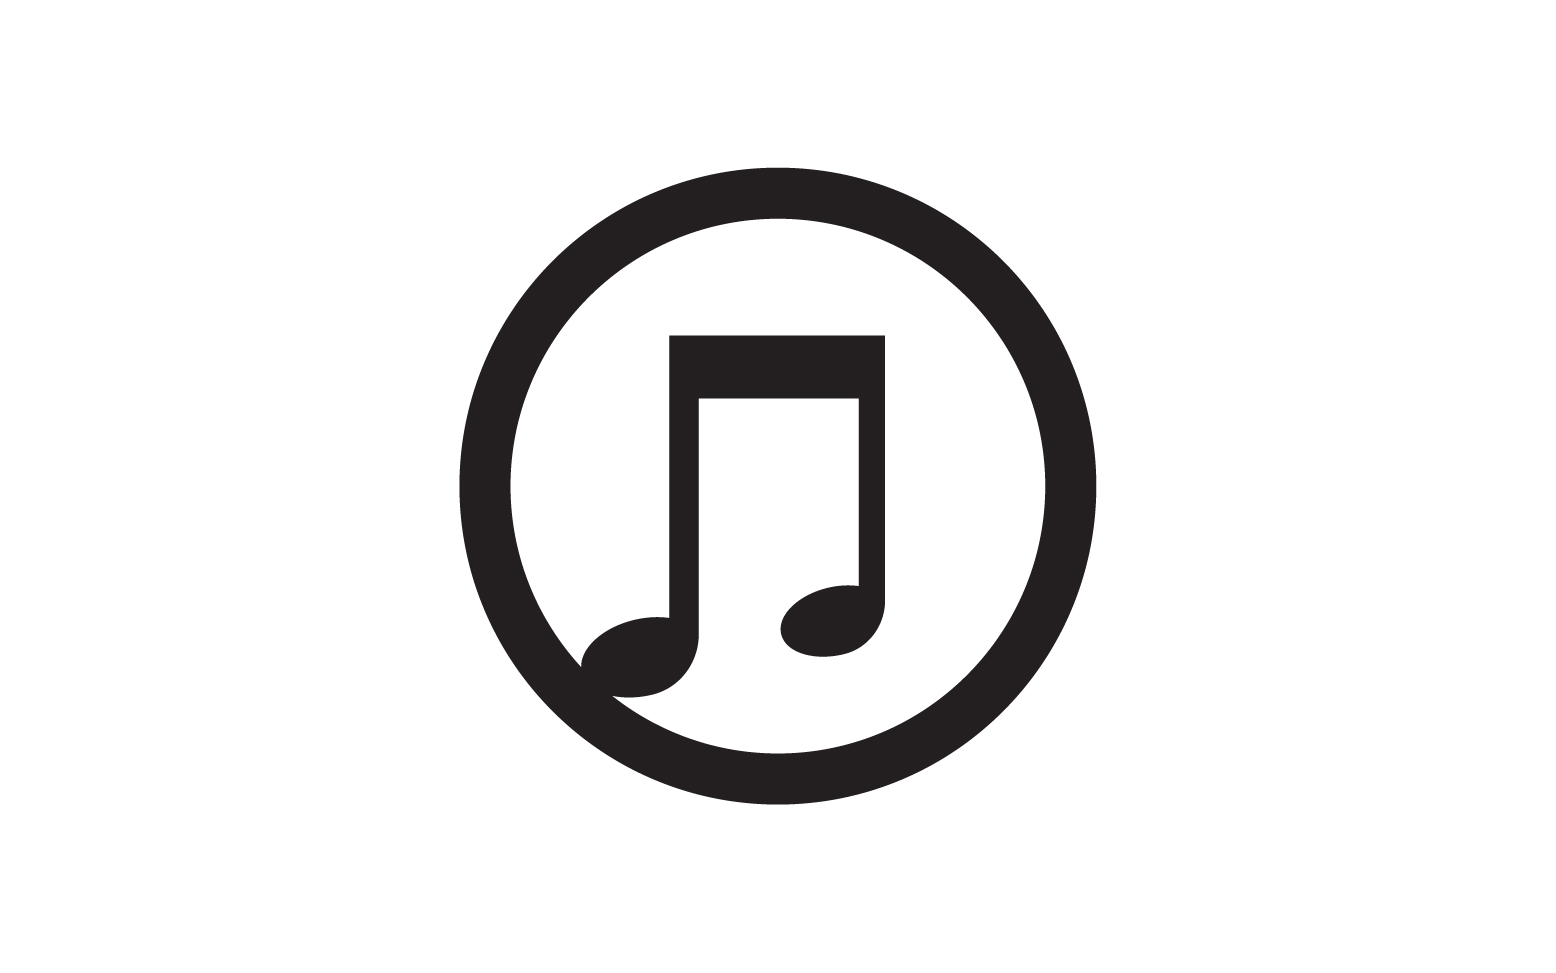 Music sound player app icon logo v13